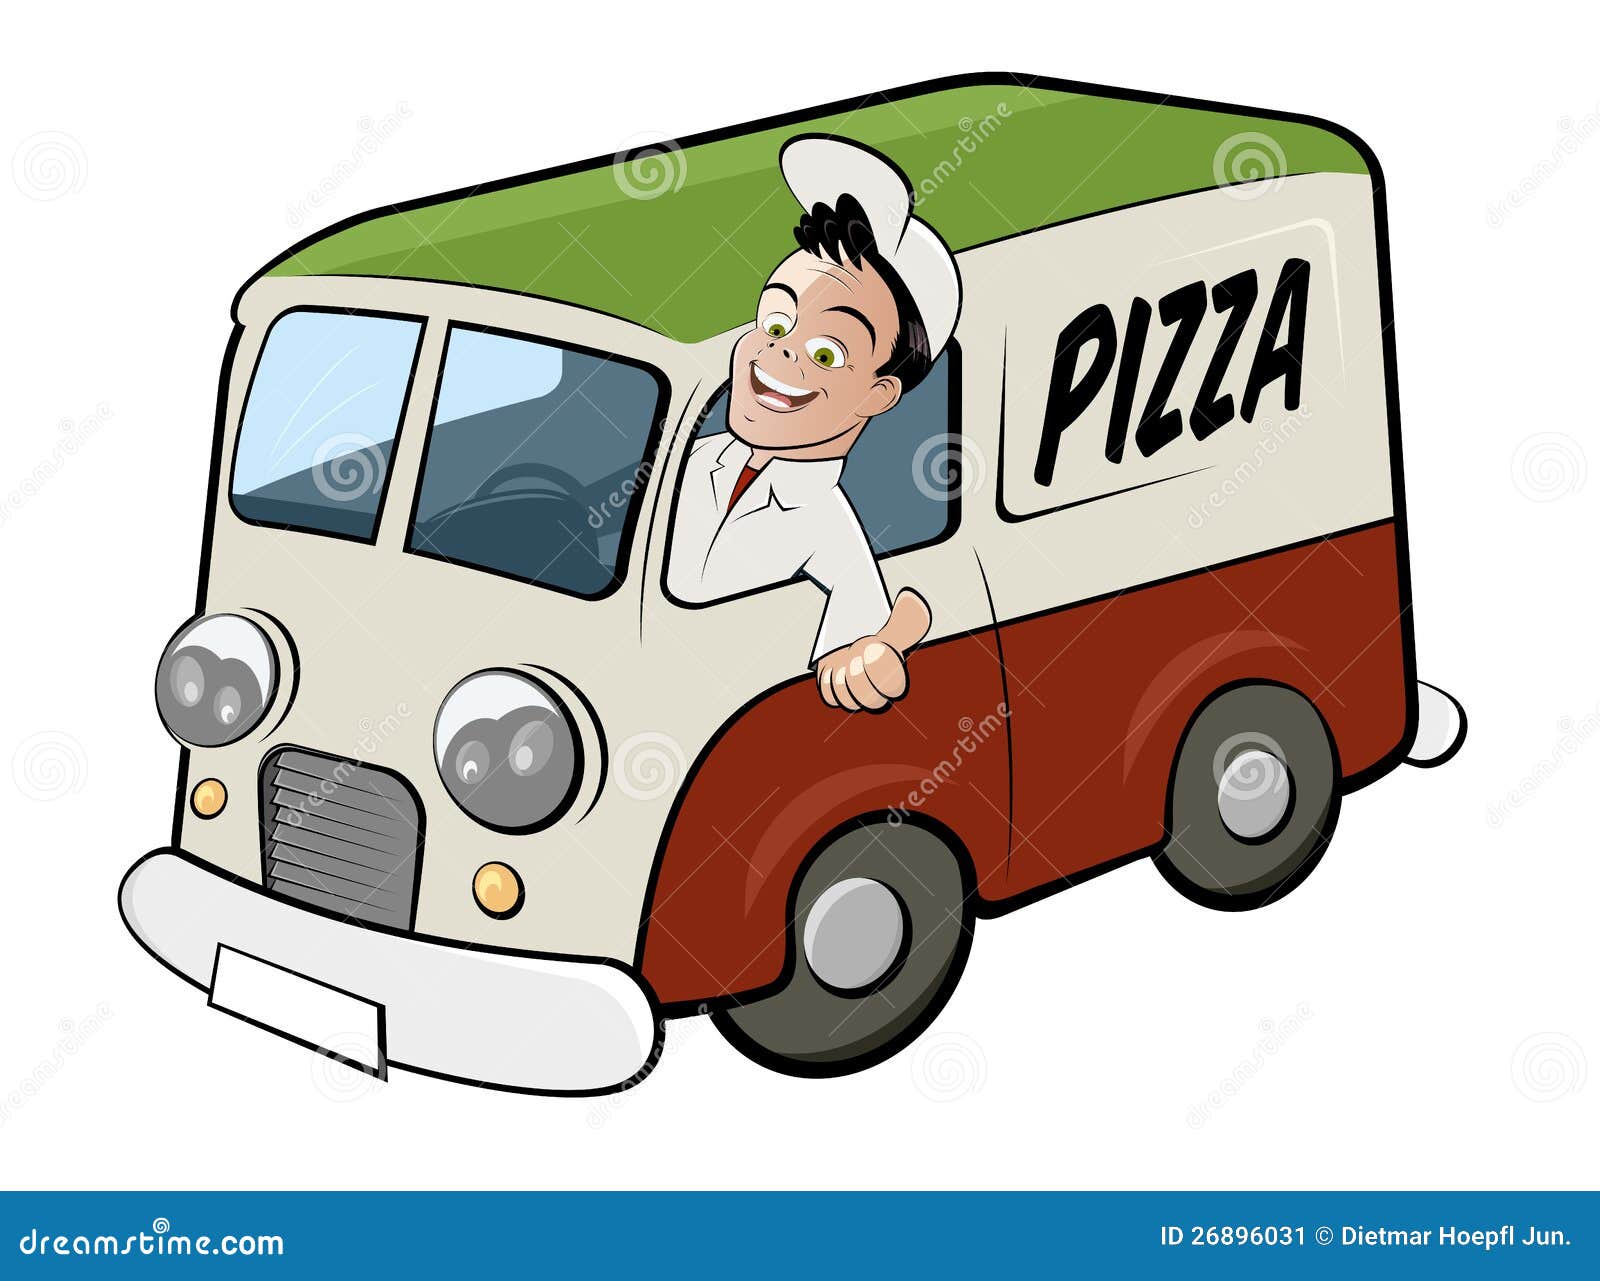 pizza delivery clipart - photo #44